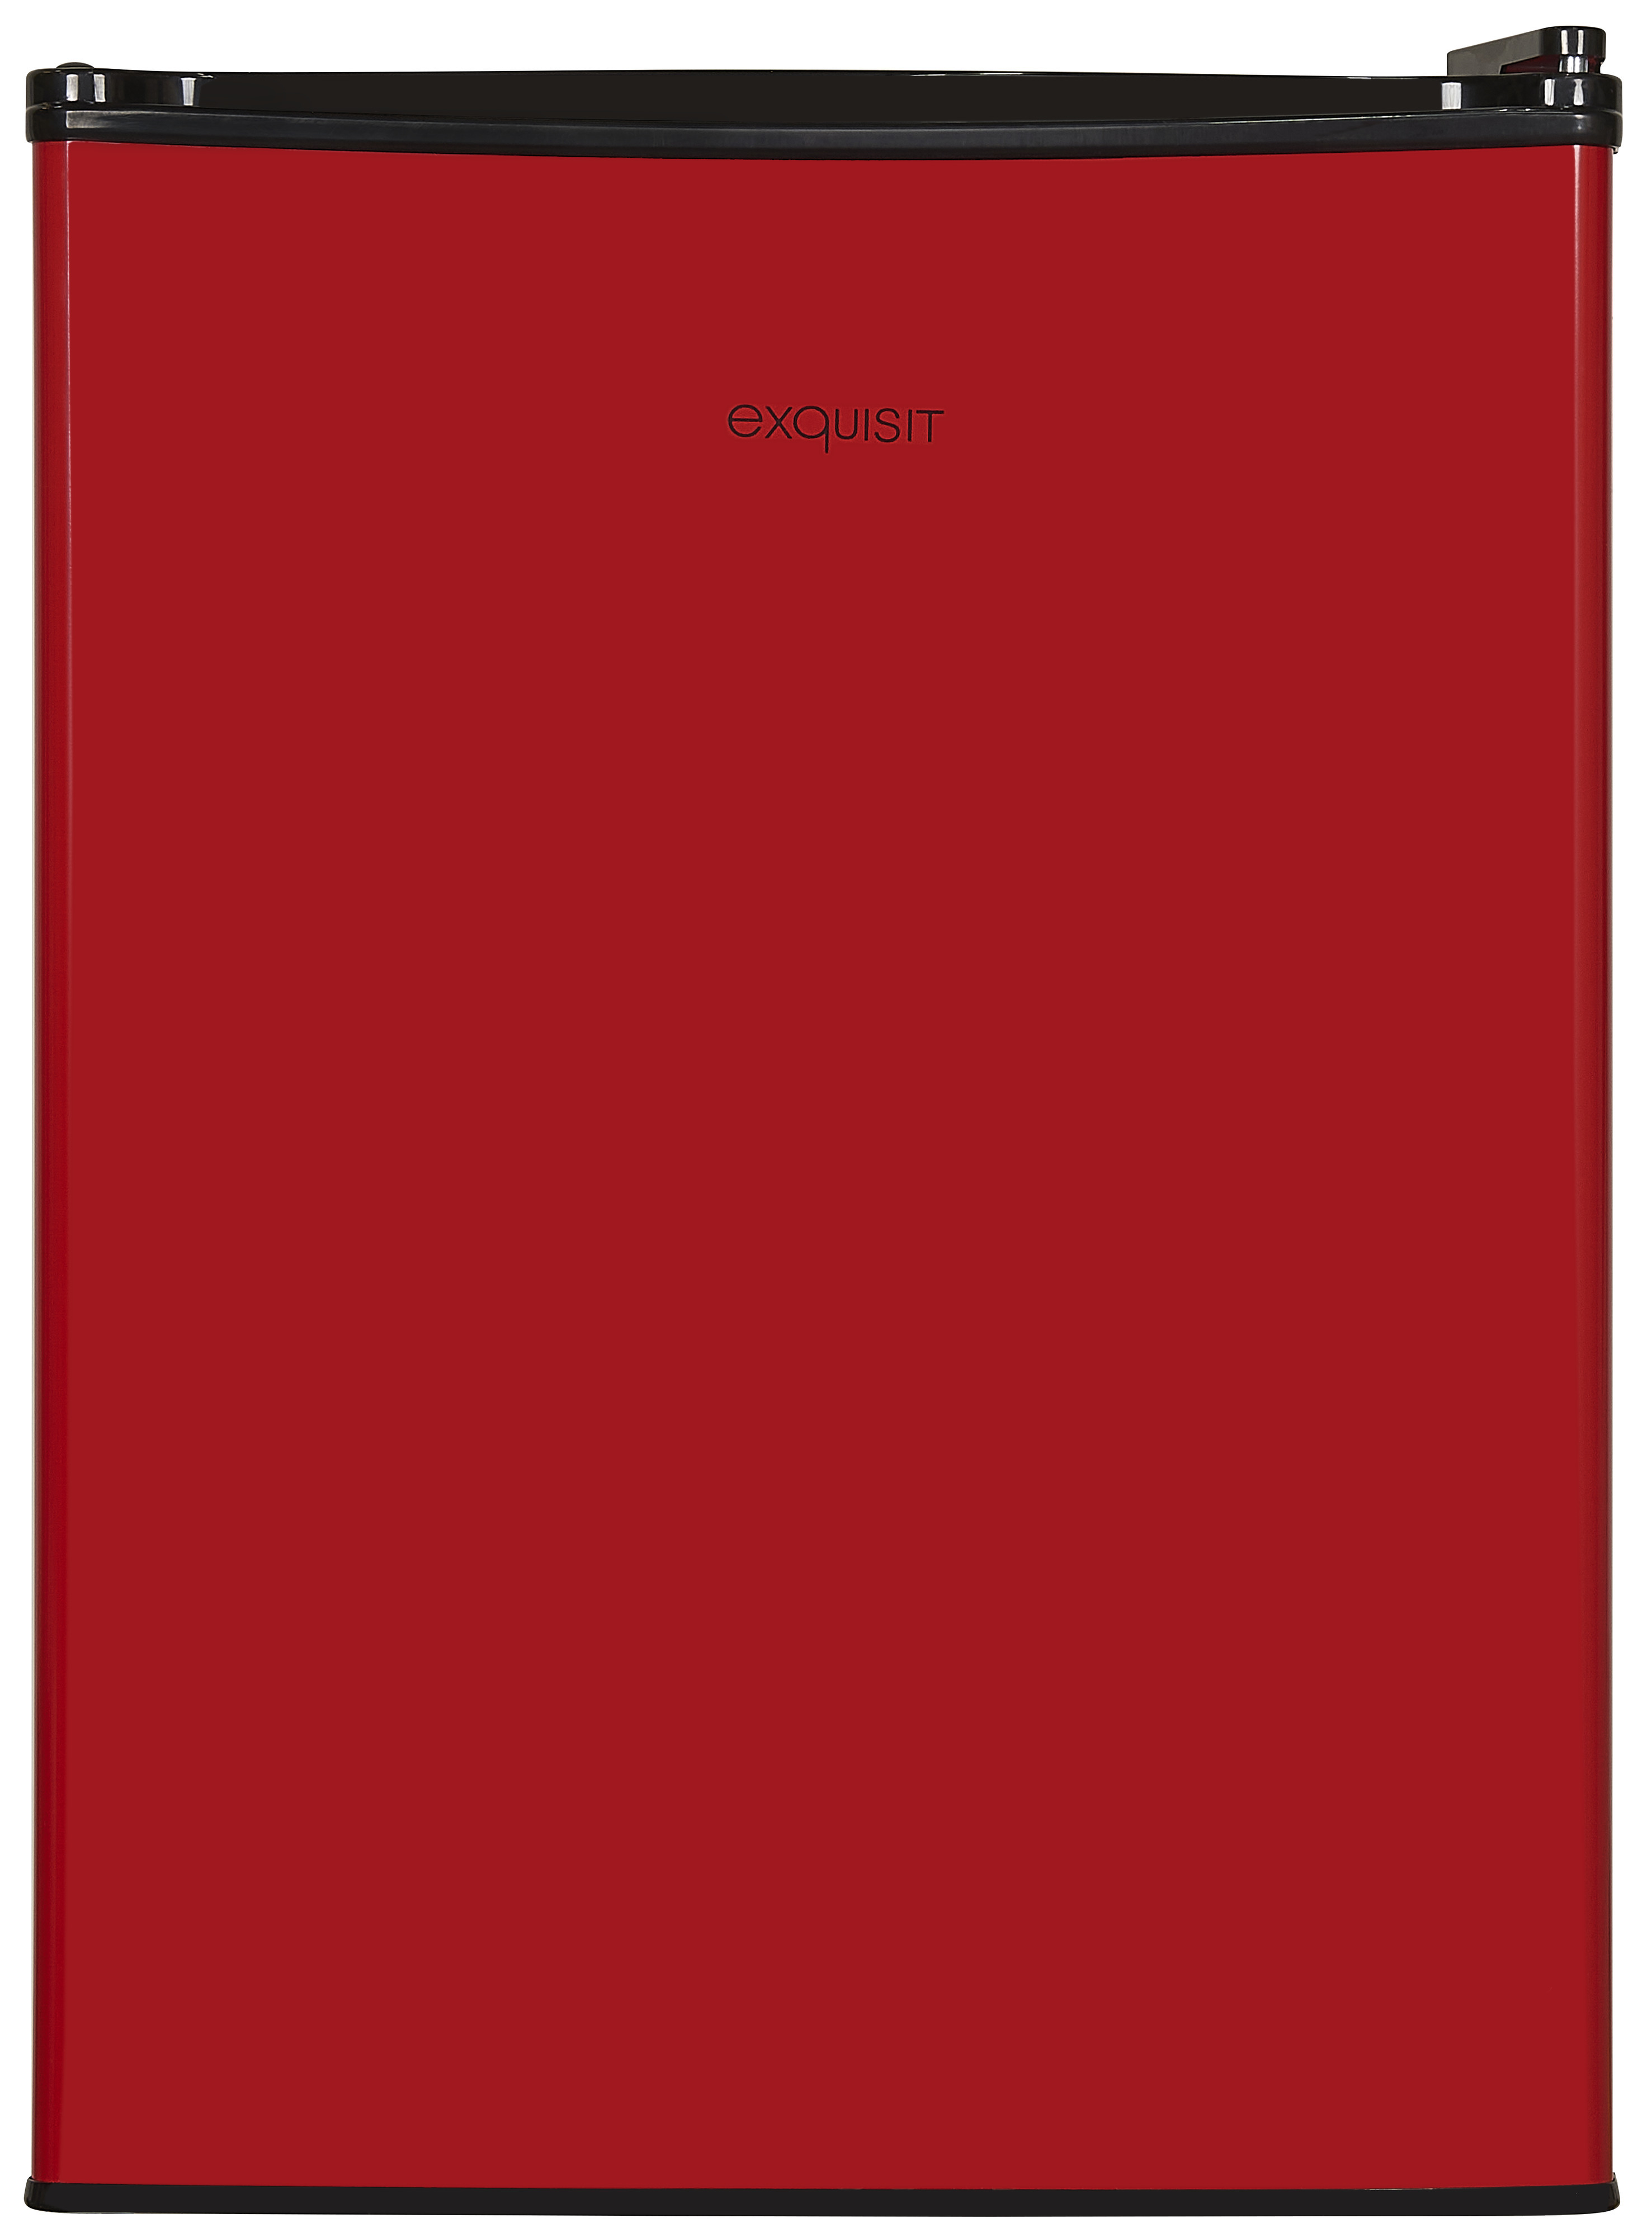 EXQUISIT KB60-V-090E rot Kühlschrank (E, Rot) mm 620 hoch